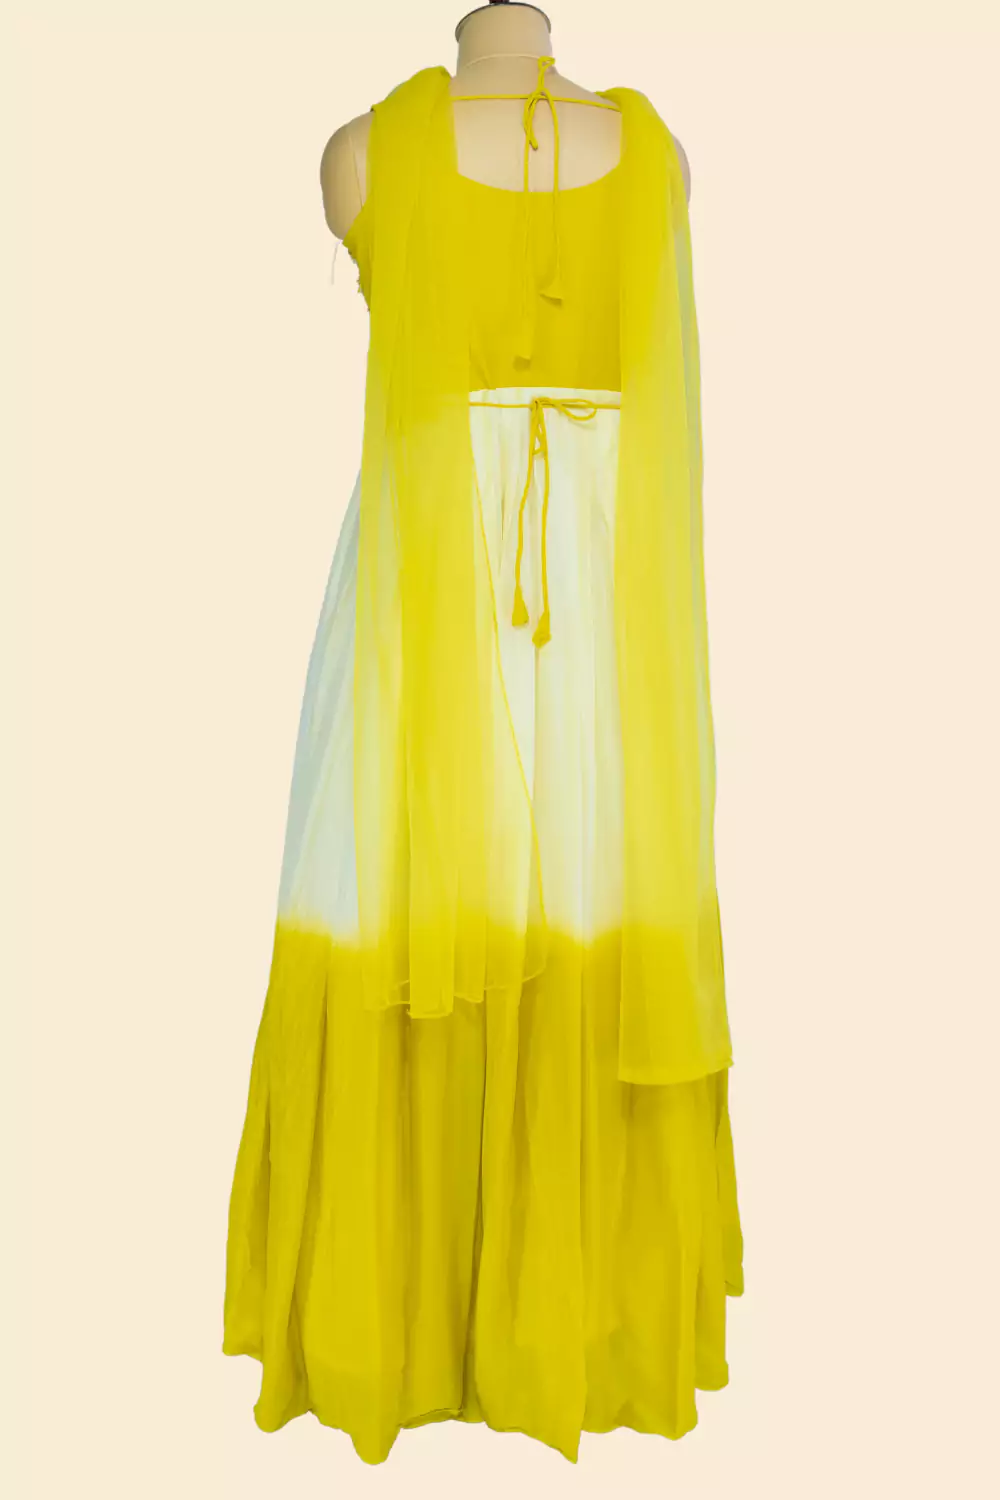 White & Yellow Haldi Gown